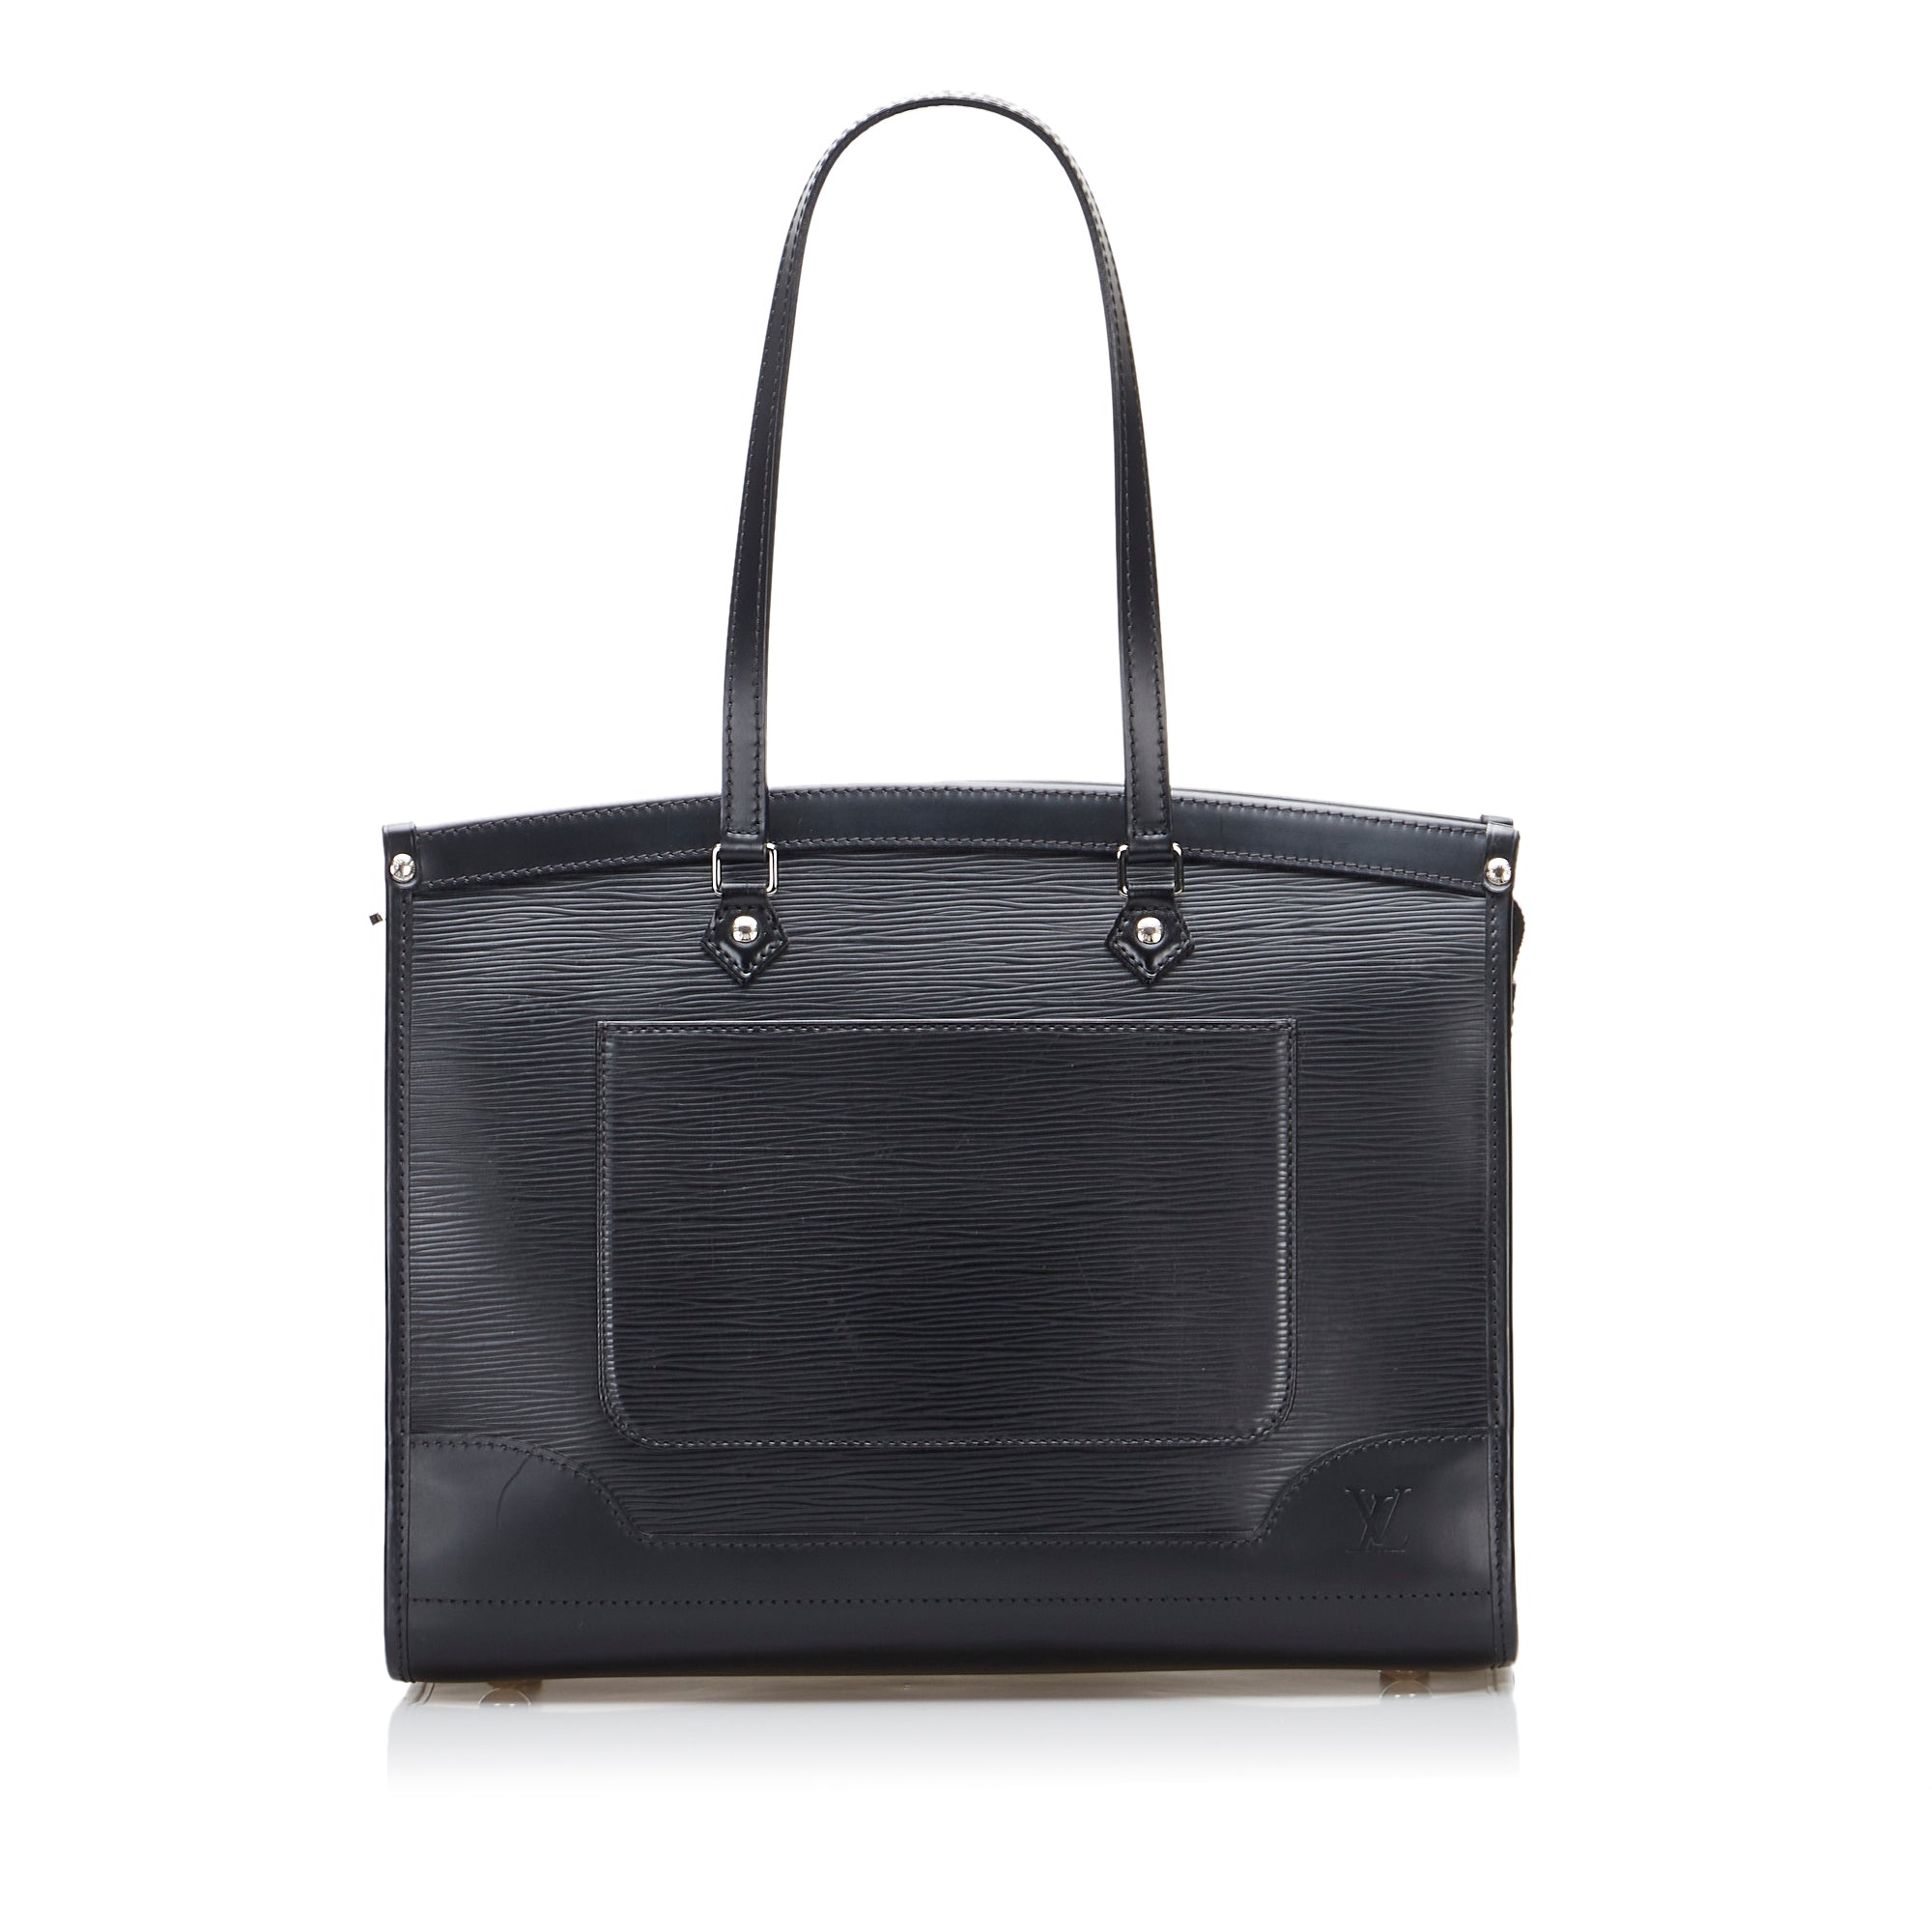 Special Edition Louis Vuitton Epi Black Leather Luggage